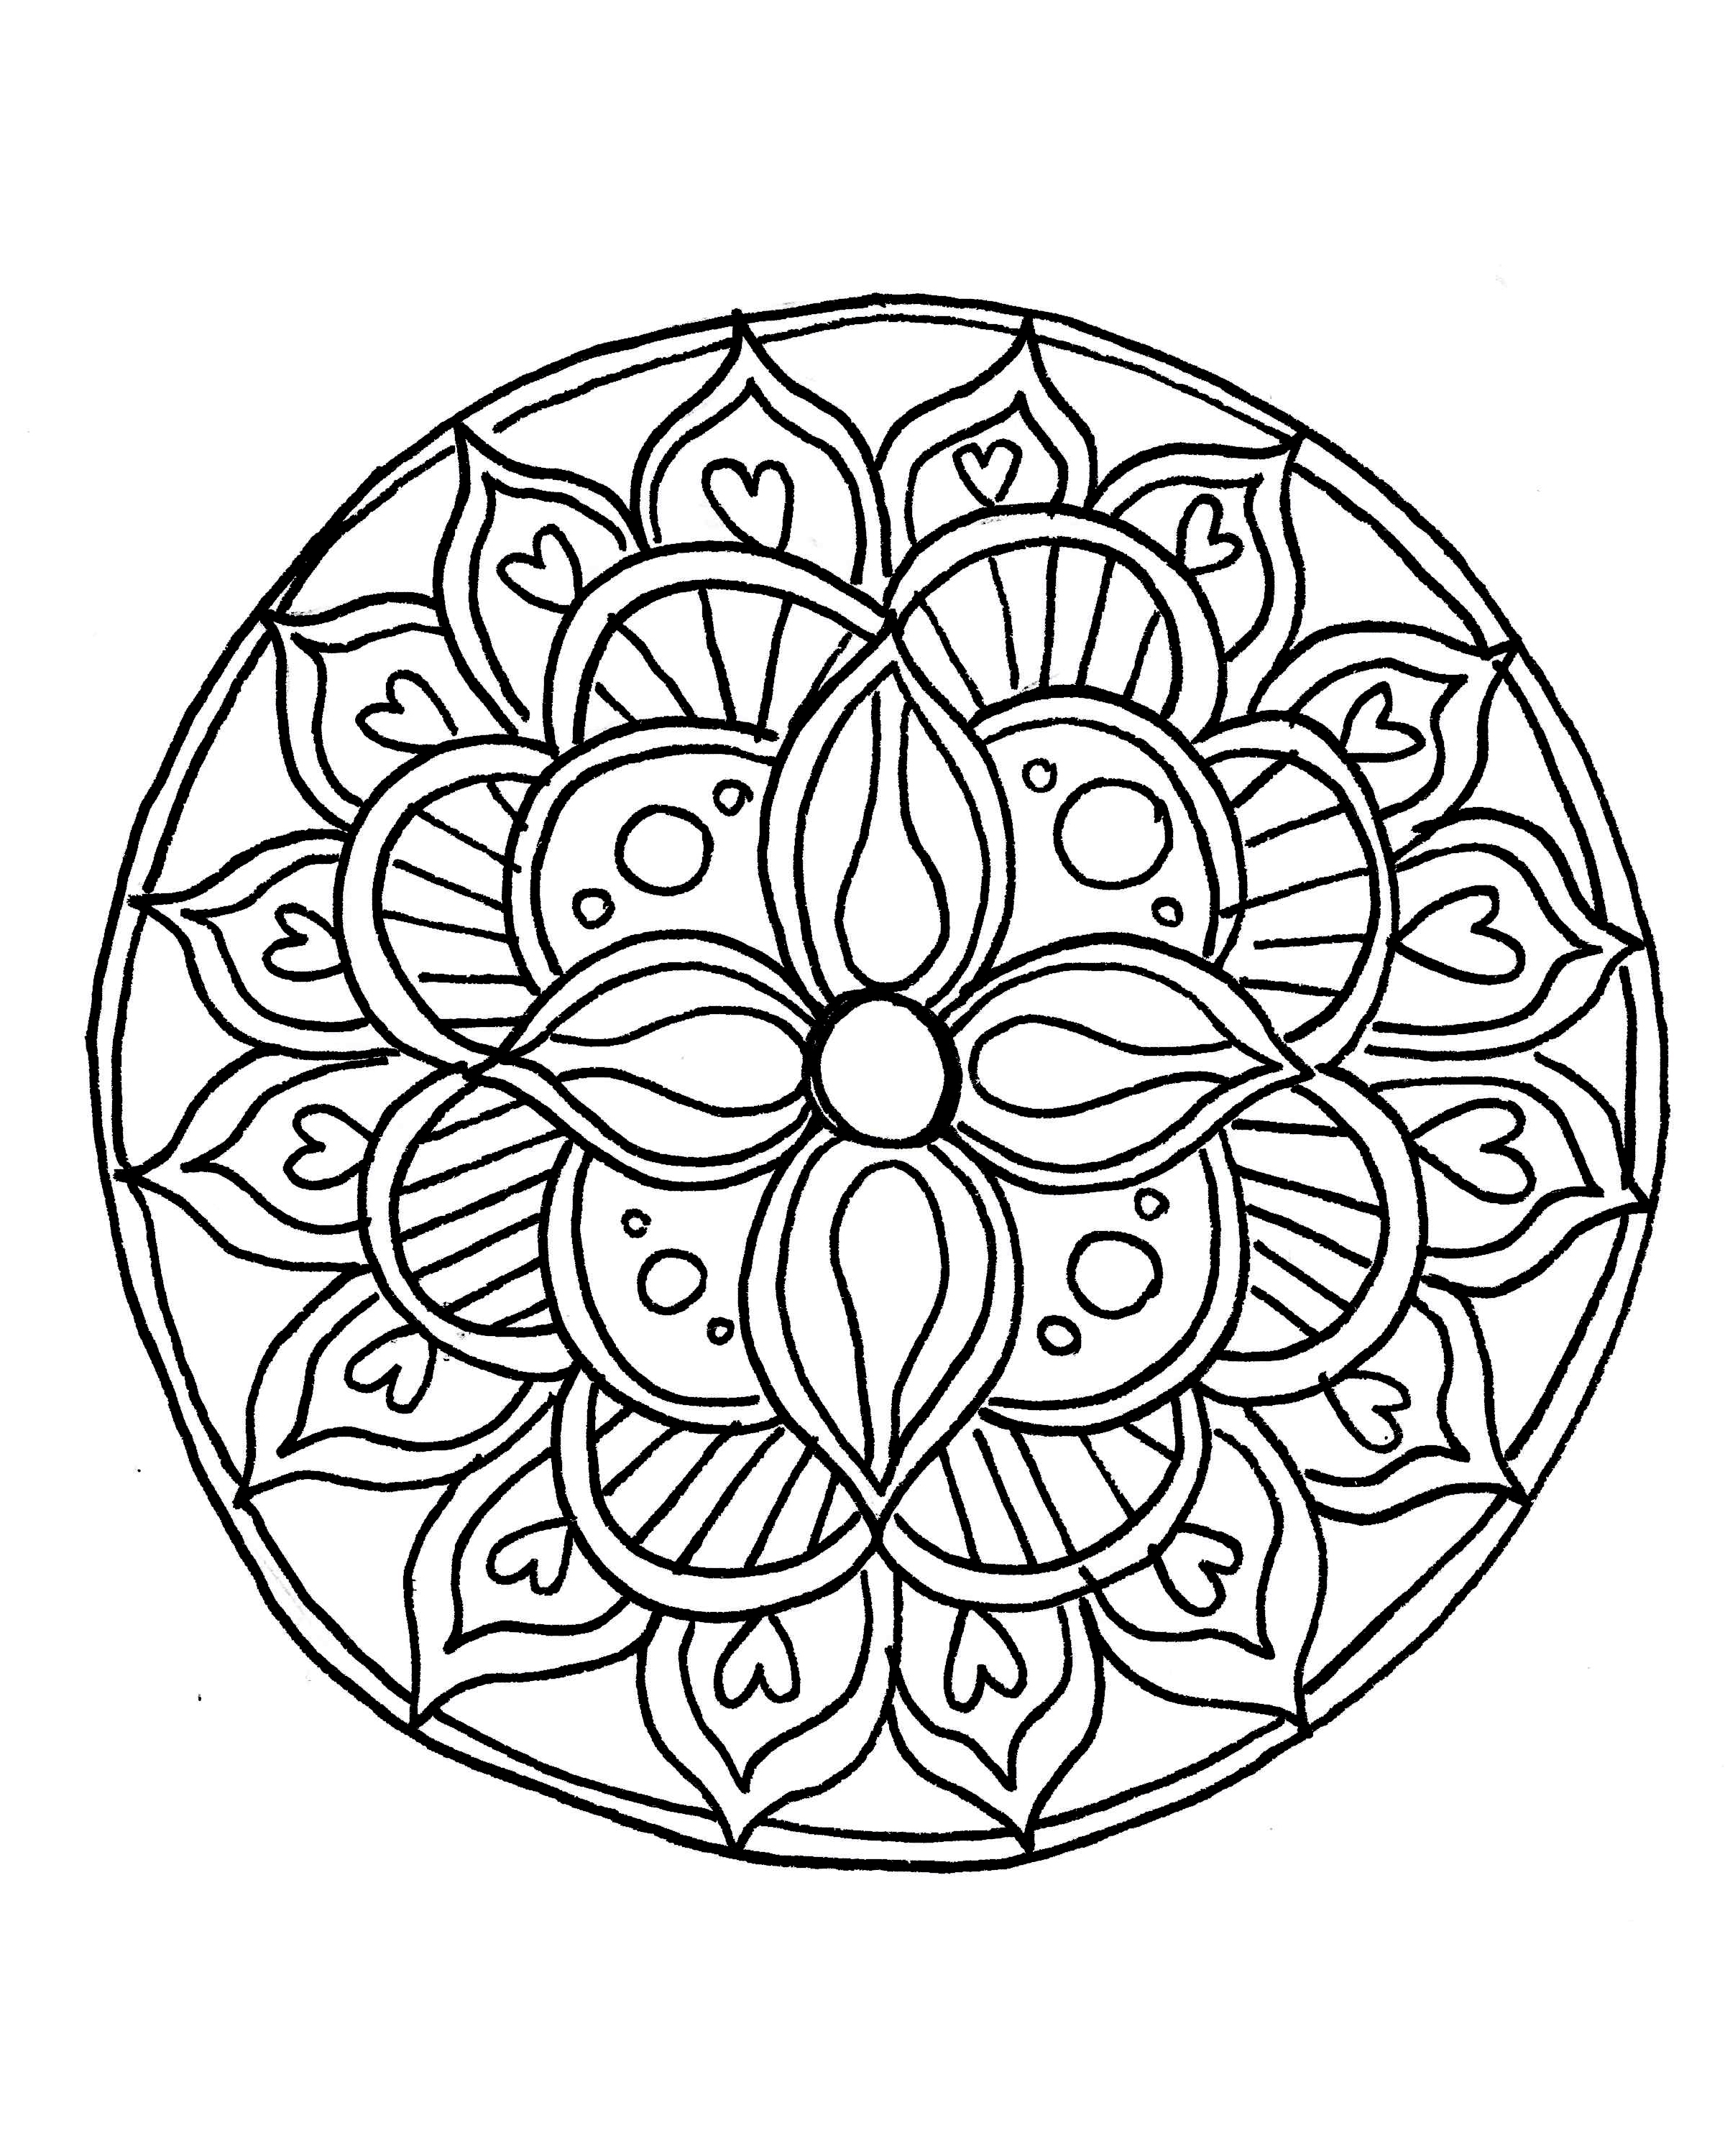 Hindu Mandala Coloring Pages At Getcolorings.com | Free Printable